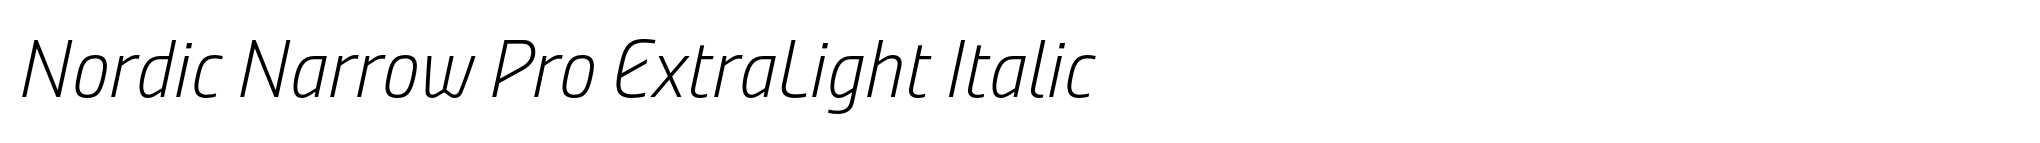 Nordic Narrow Pro ExtraLight Italic image